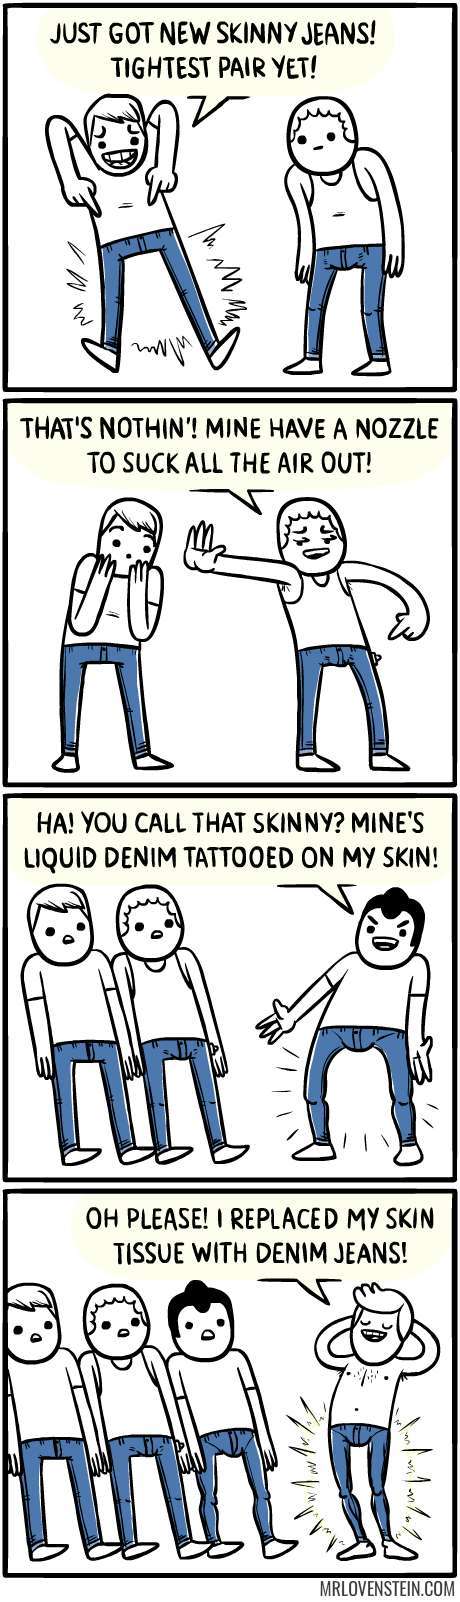 skinny jeans causes rashes - meme